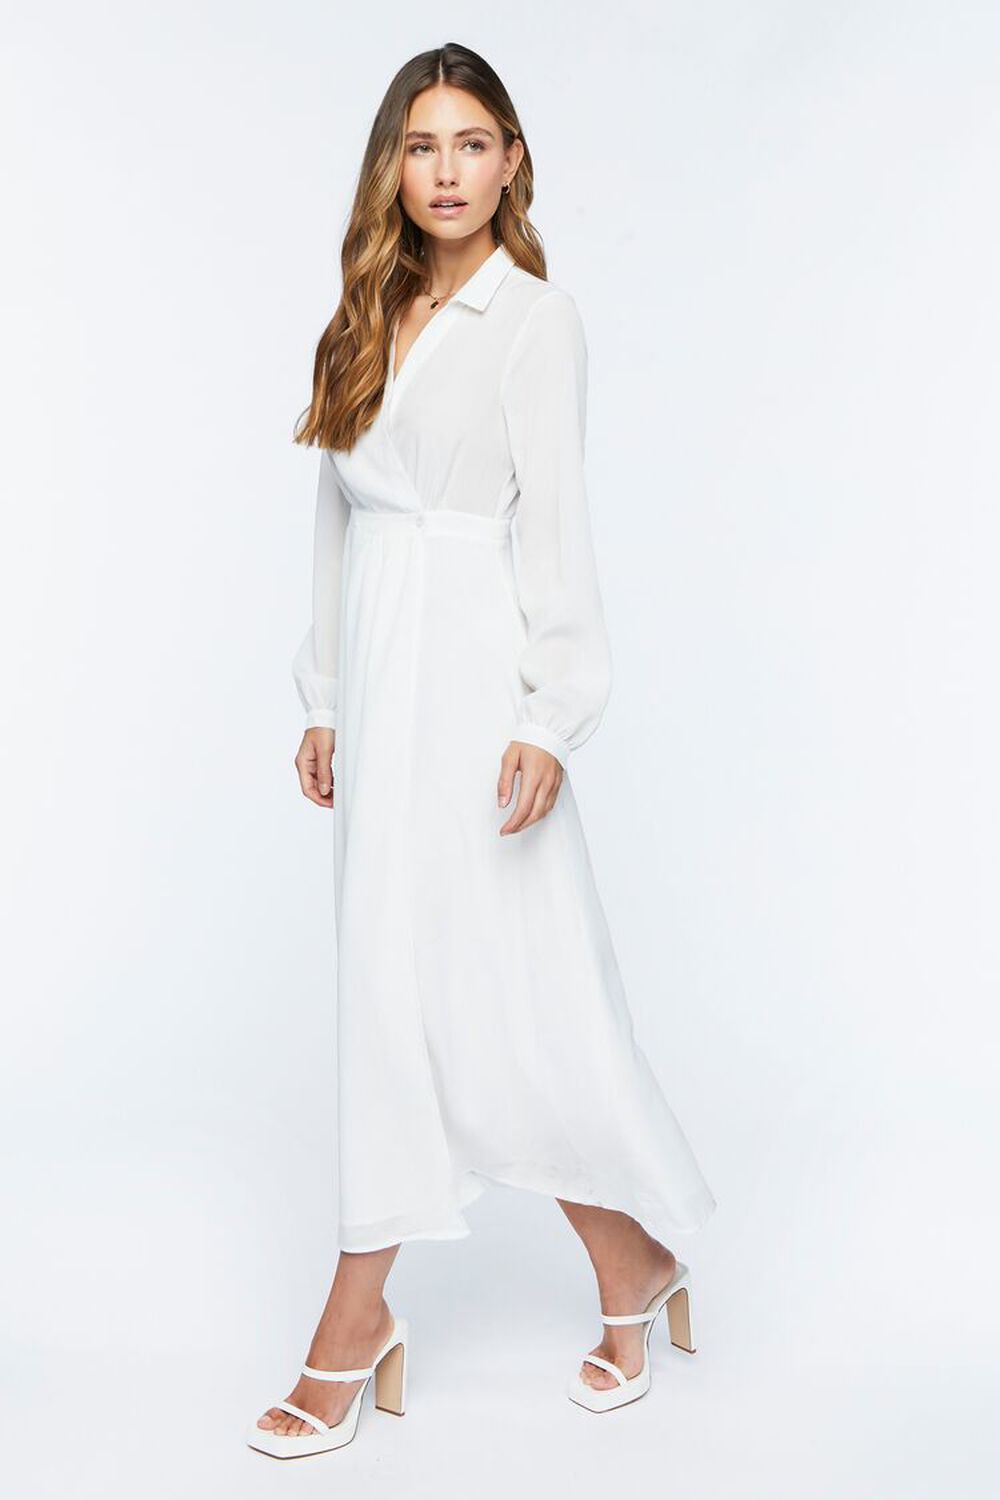 WHITE Collared Wrap Maxi Dress, image 2